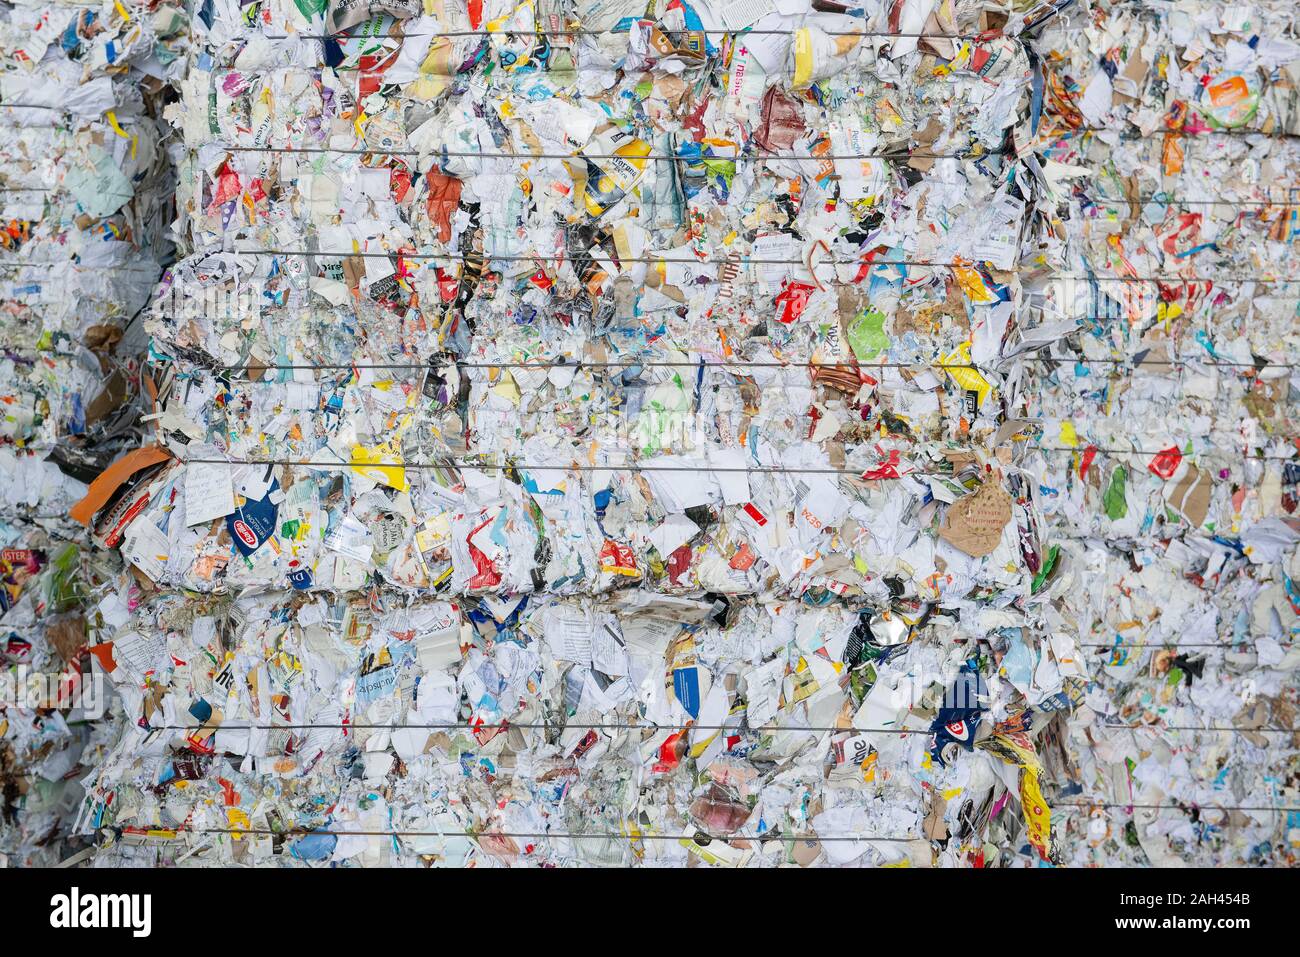 Germany, Bavaria, Stacks of waste paper Stock Photo